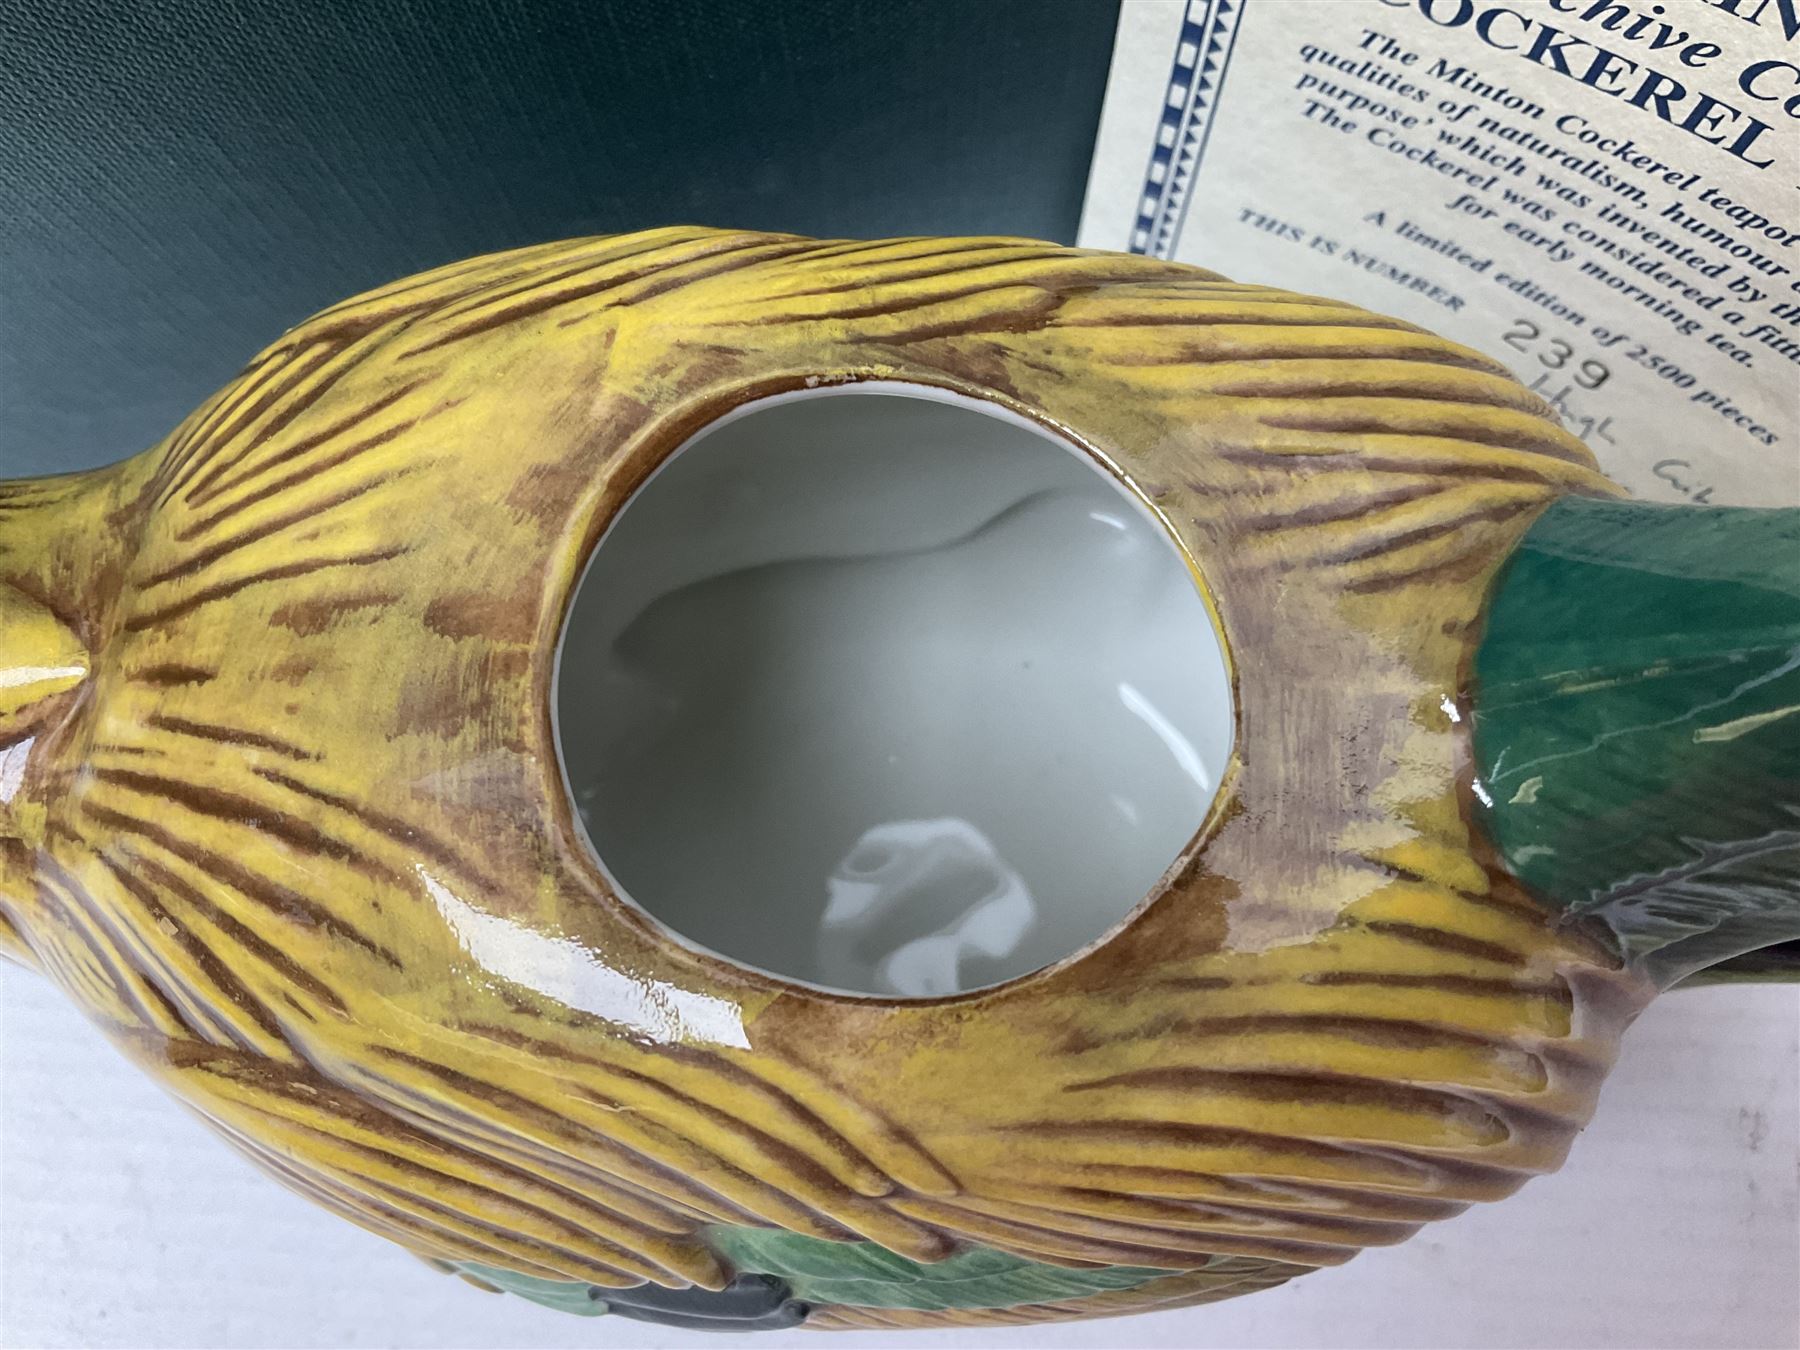 Minton Archive collection cockerel teapot - Image 6 of 12